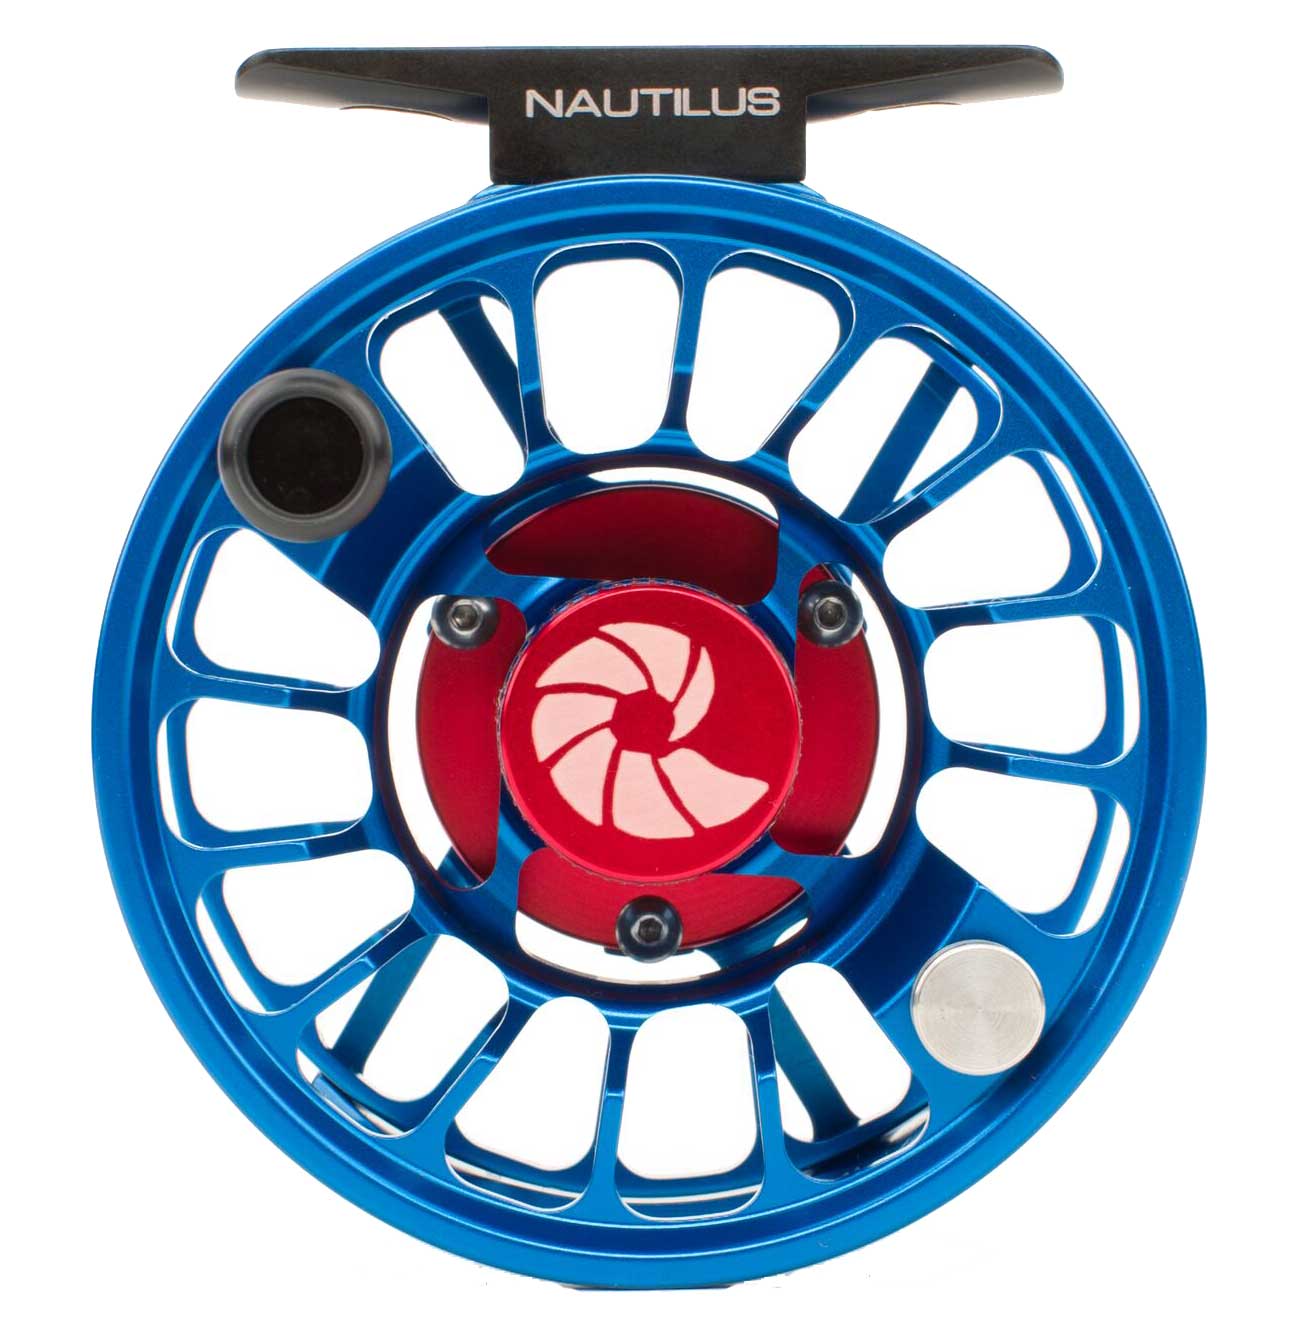 Nautilus X-Series Fly Reel